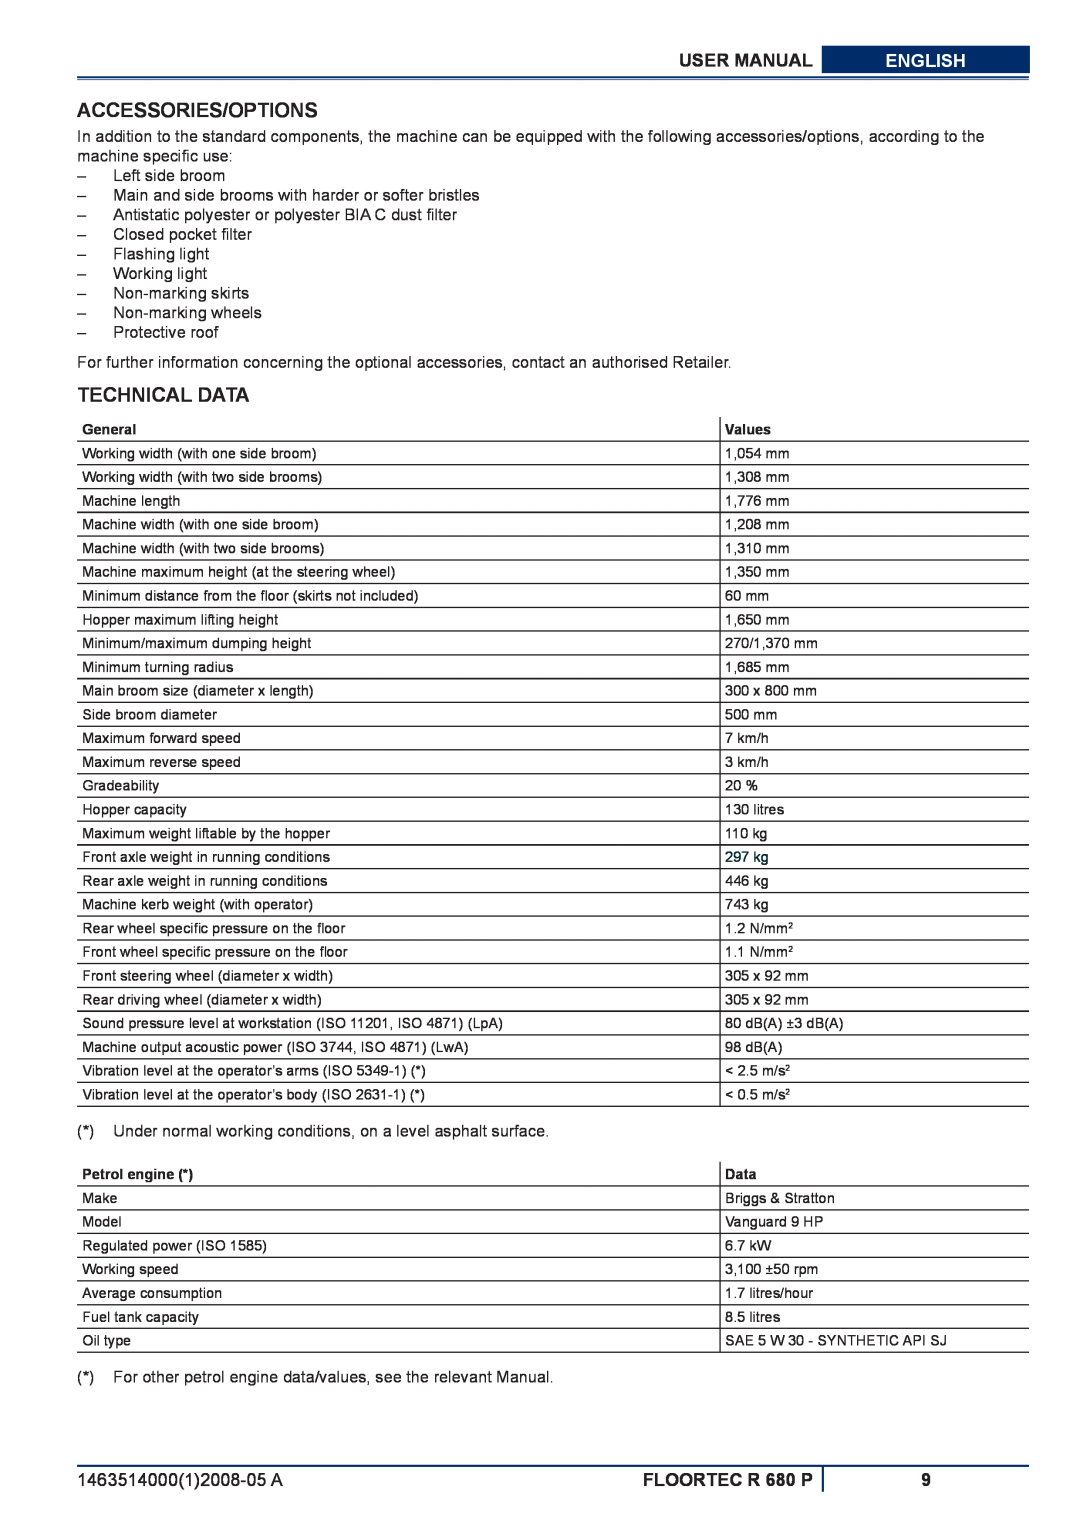 Nilfisk-ALTO manuel dutilisation Accessories/Options, Technical Data, User Manual, English, FLOORTEC R 680 P 